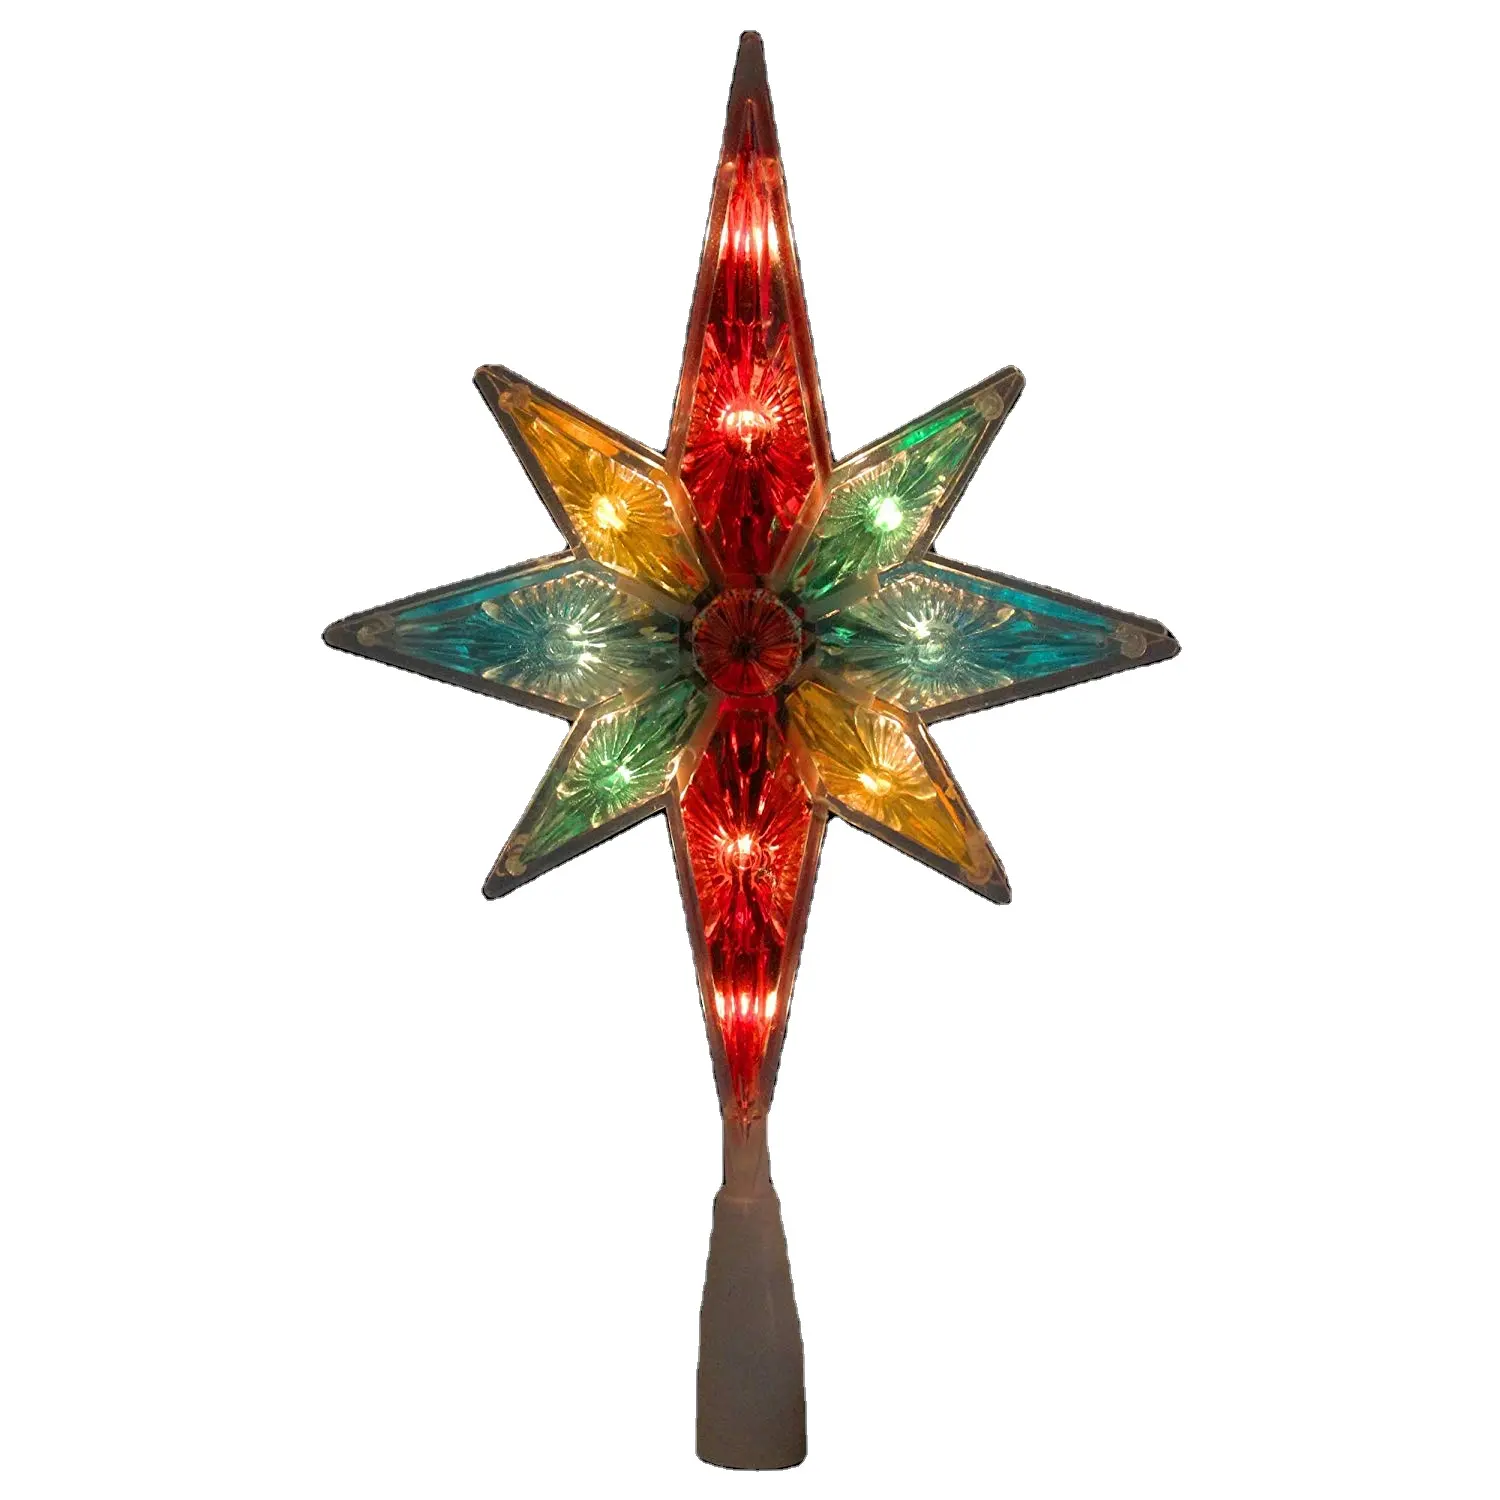 UL 11 "10 조명이있는 베들레헴 크리스마스 트리 토퍼의 멀티 컬러면 처리 된 별